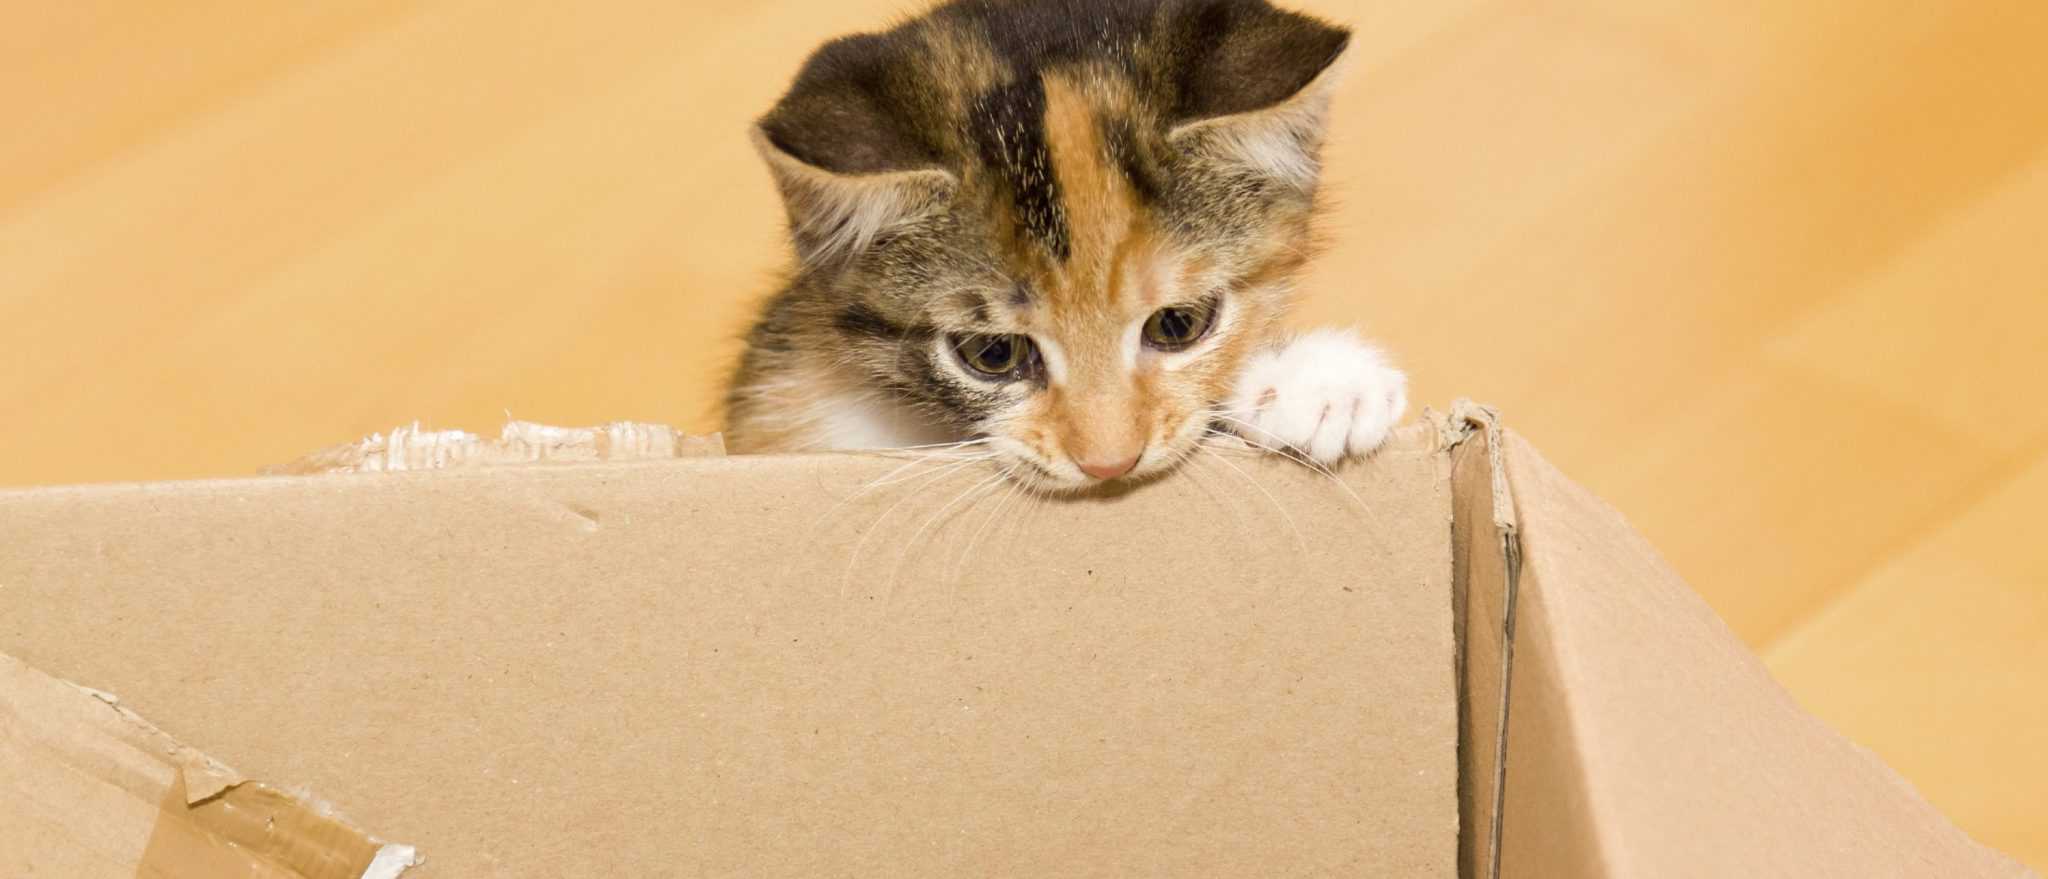 Cat looking inside a box